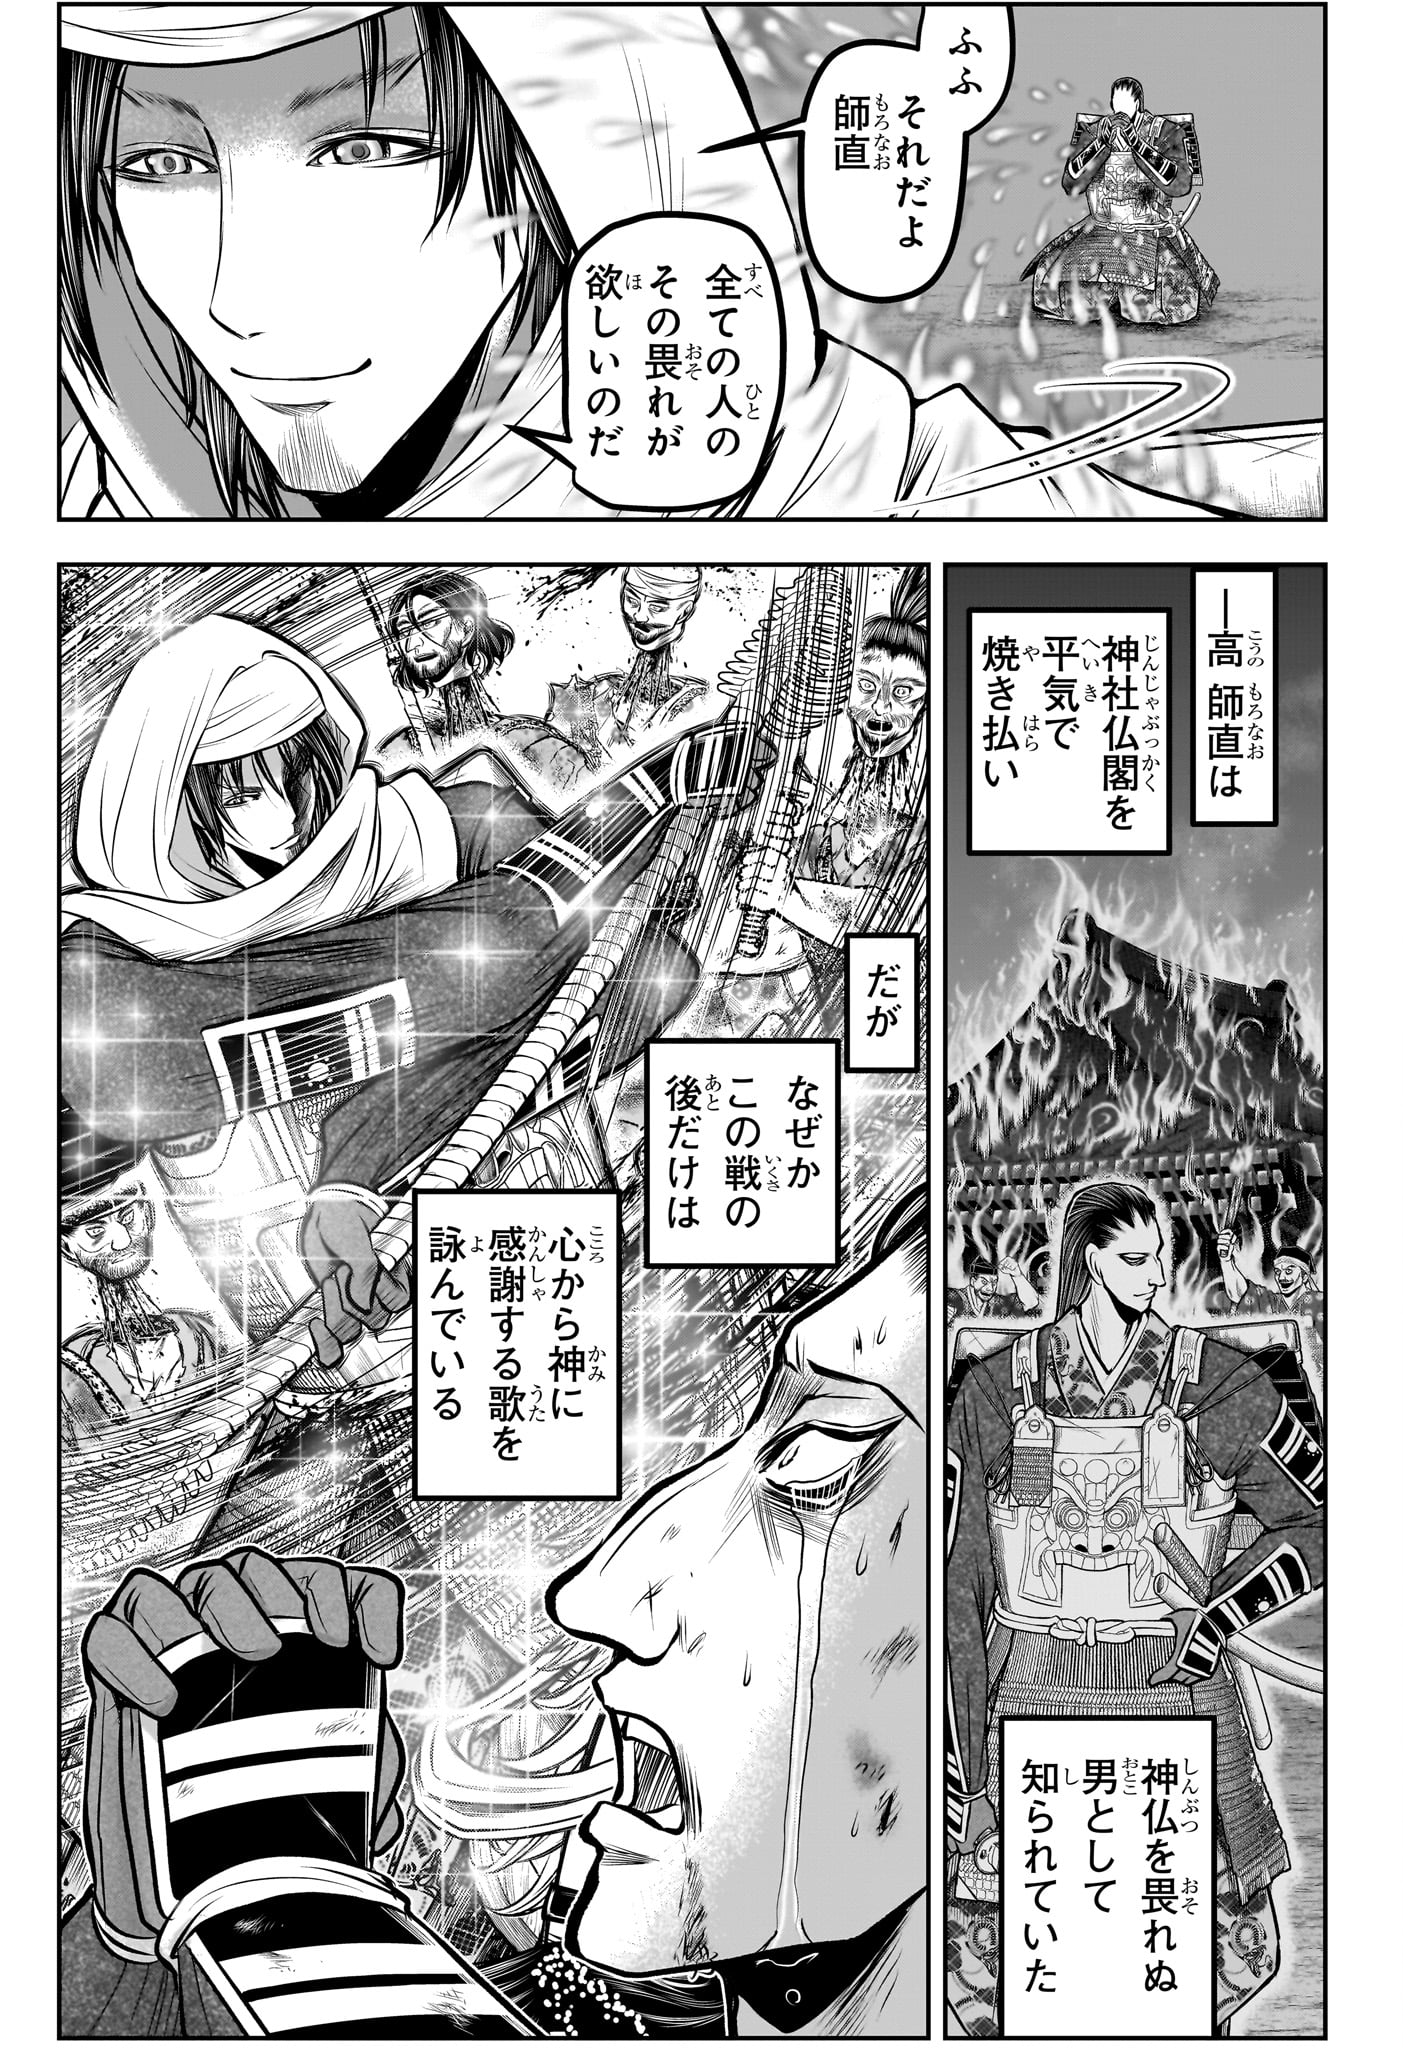 Nige Jouzu no Wakagimi - Chapter 165 - Page 17